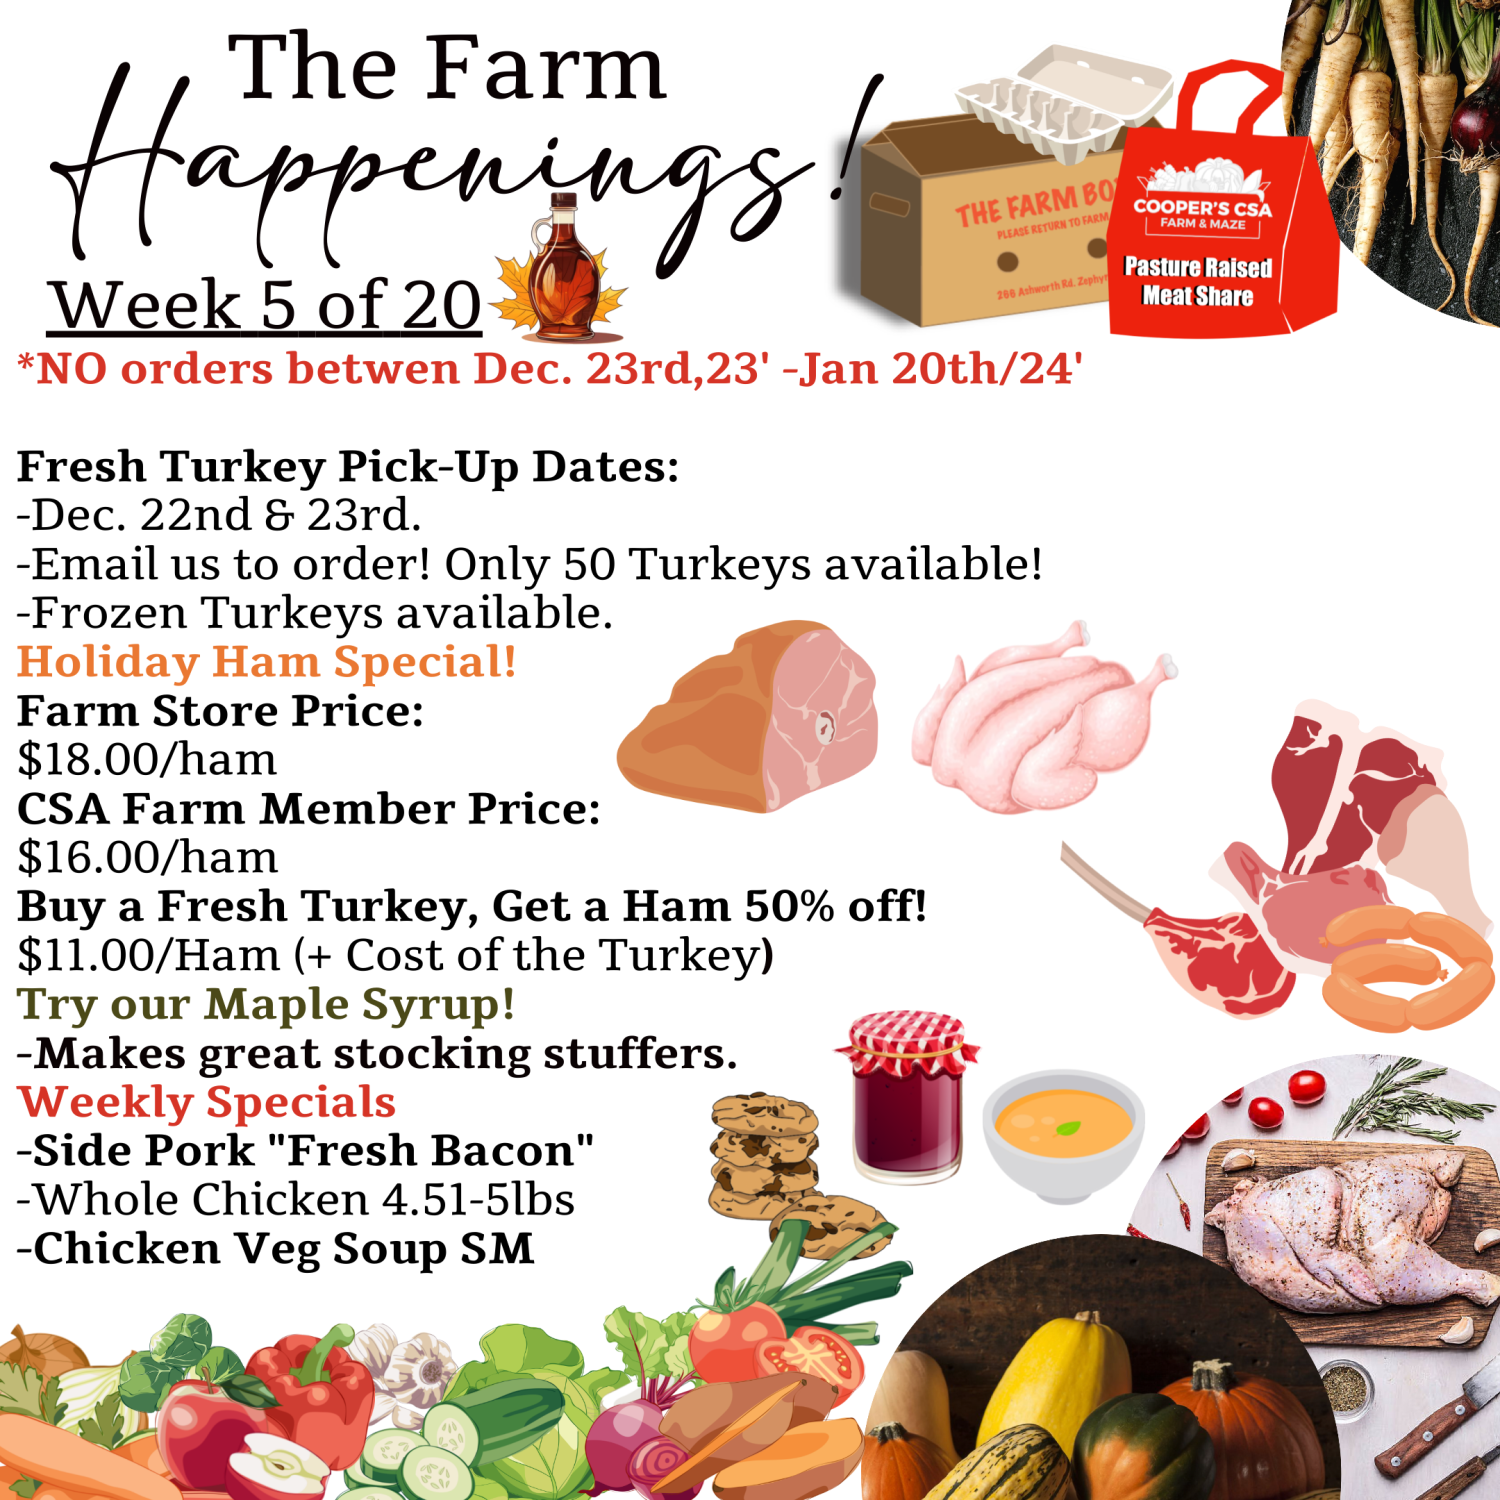 "The Farm Box"-Coopers CSA Farm Farm Happenings Dec. 12-16th